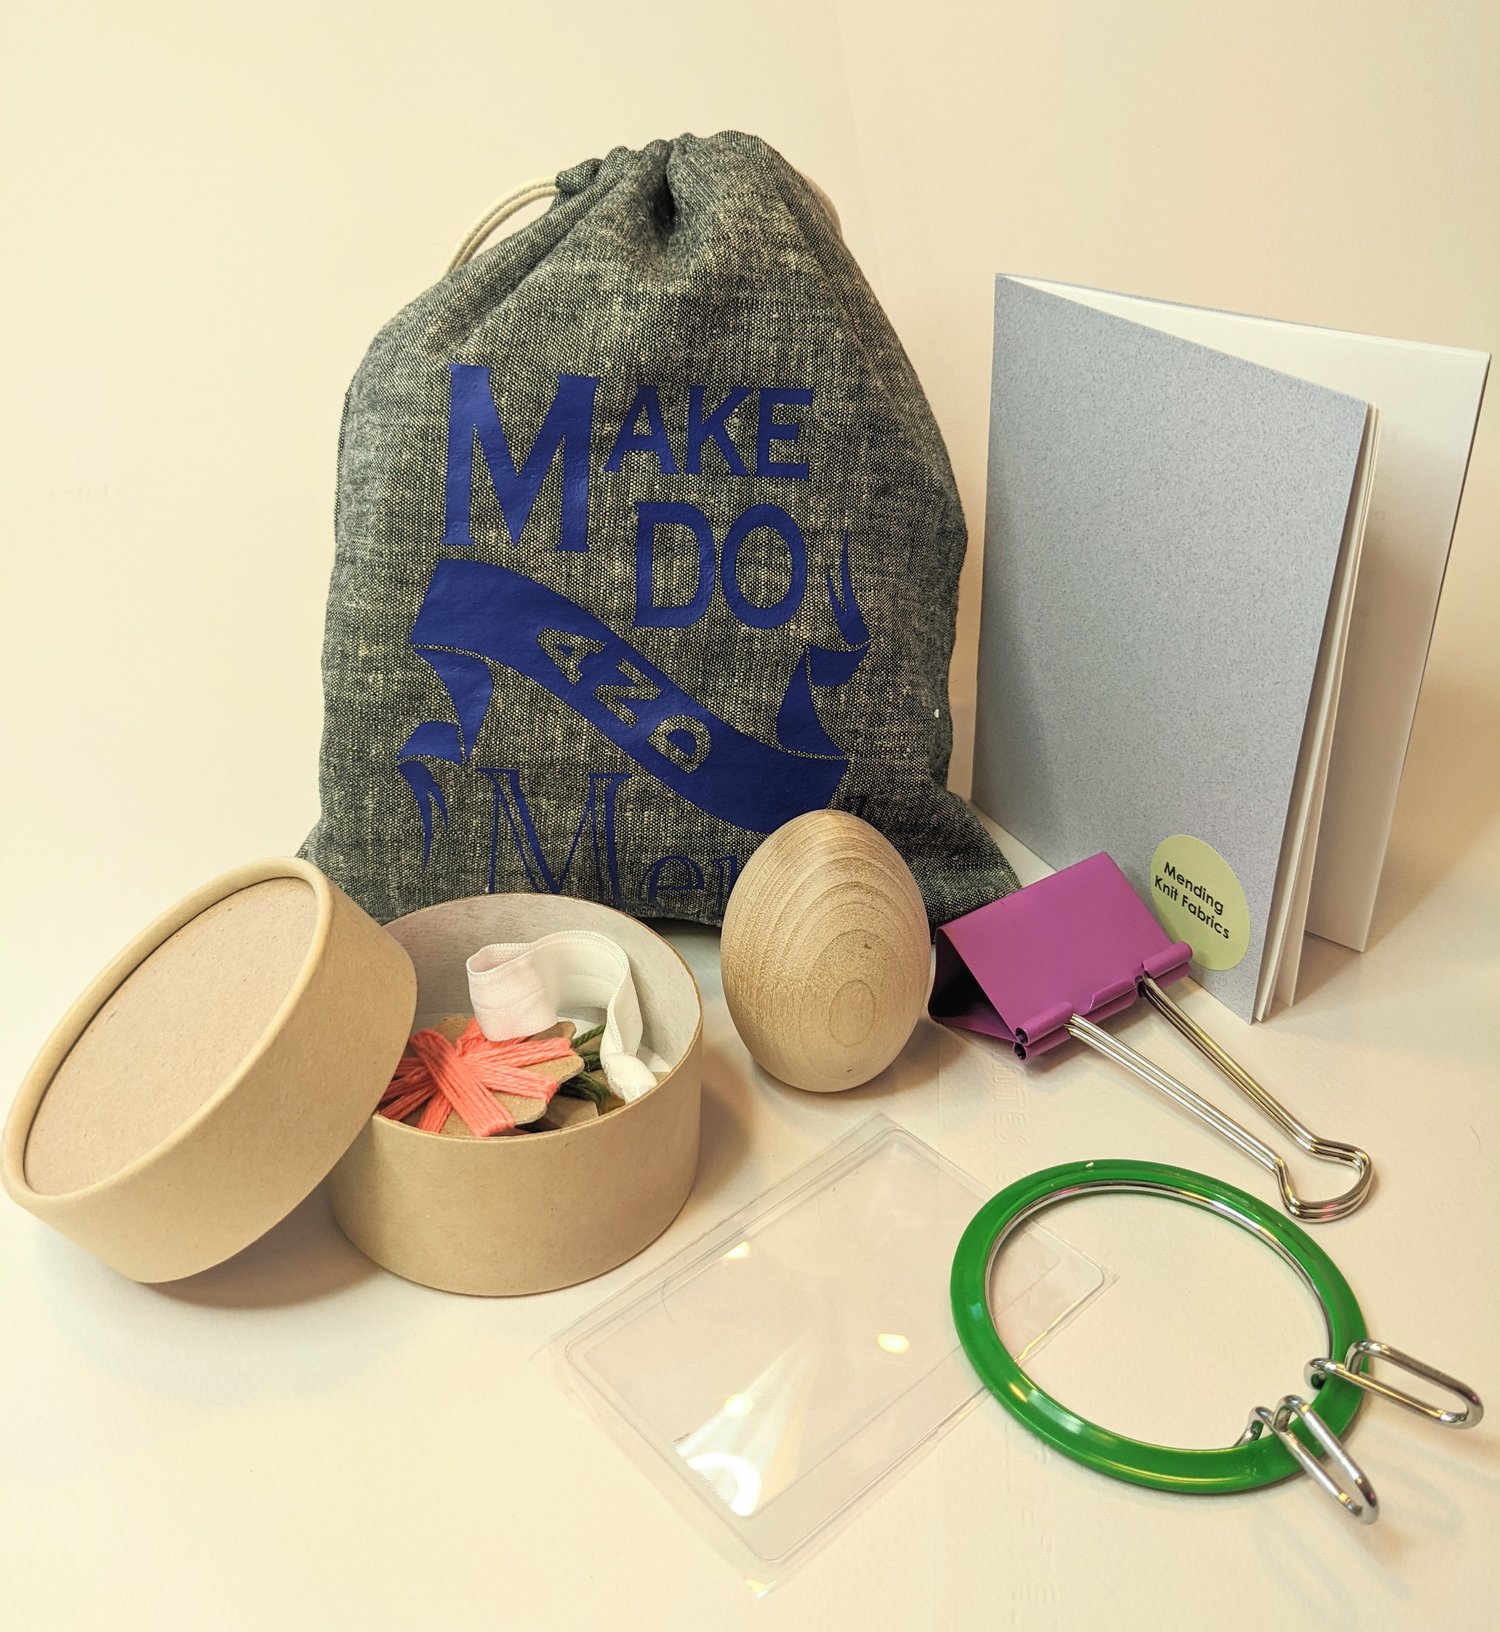 Mending Kit for Knit Fabrics - Version 2!